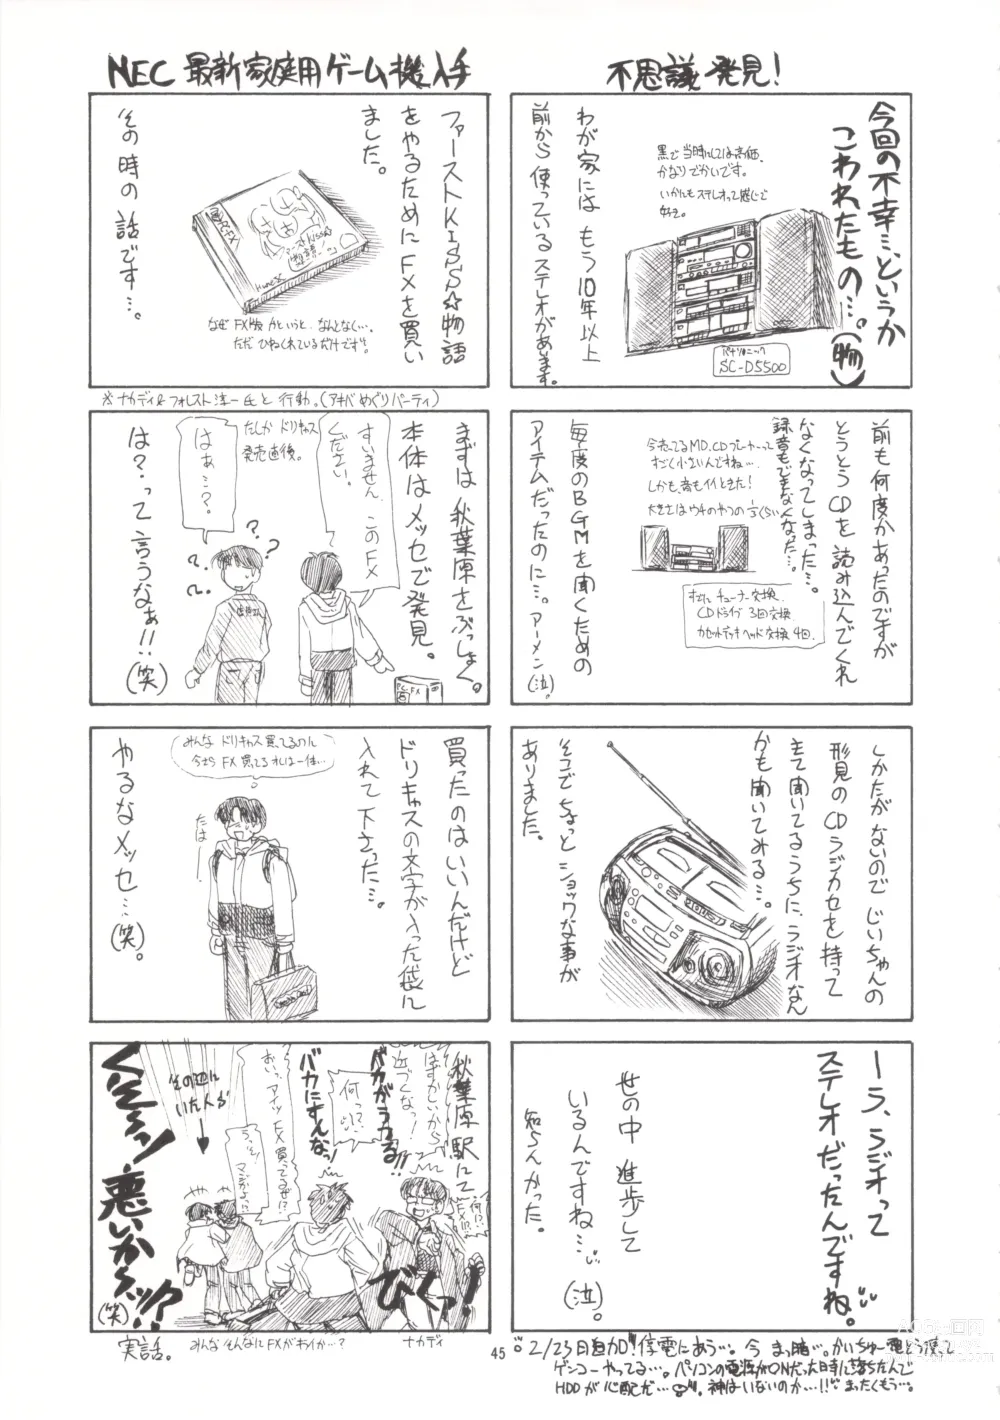 Page 44 of doujinshi Manami C-SPEC